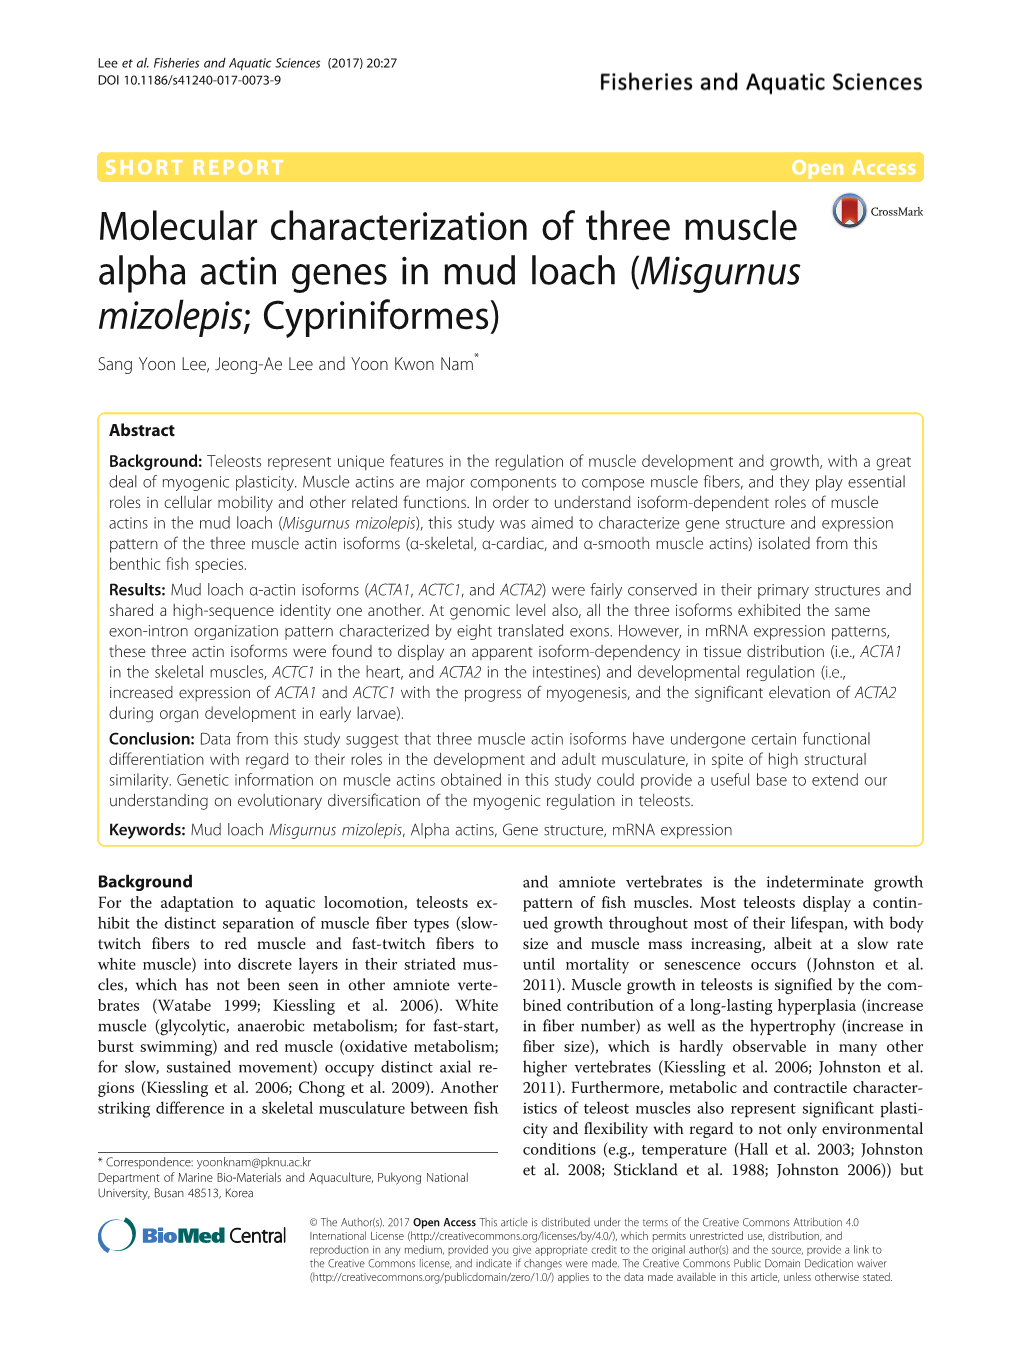 Molecular Characterization of Three Muscle Alpha Actin Genes in Mud Loach (Misgurnus Mizolepis; Cypriniformes) Sang Yoon Lee, Jeong-Ae Lee and Yoon Kwon Nam*